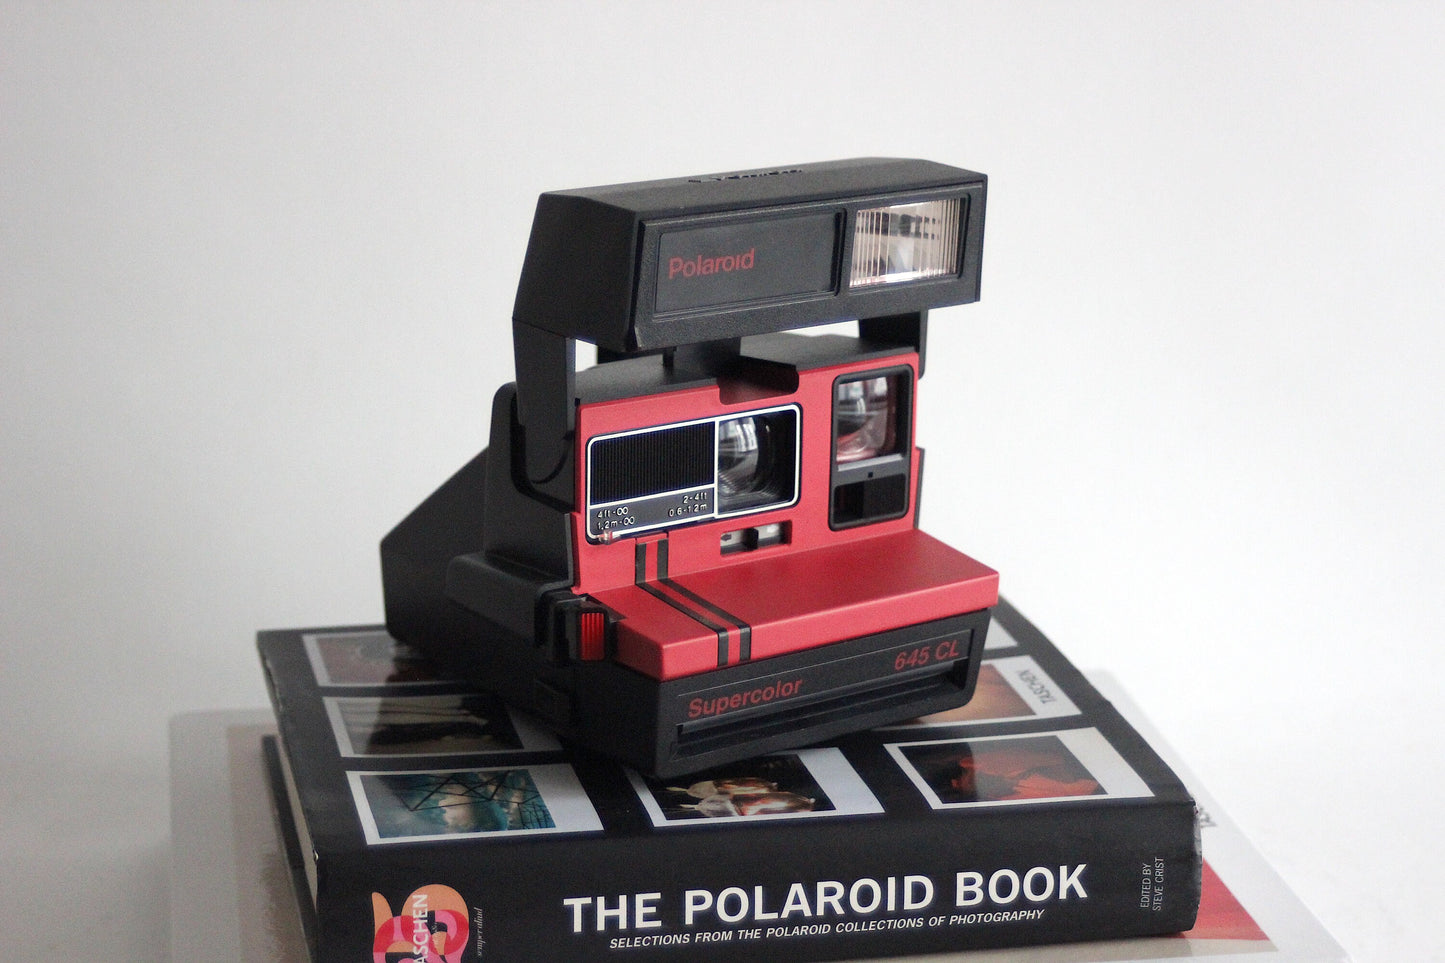 Polaroid Supercolor 645CL red